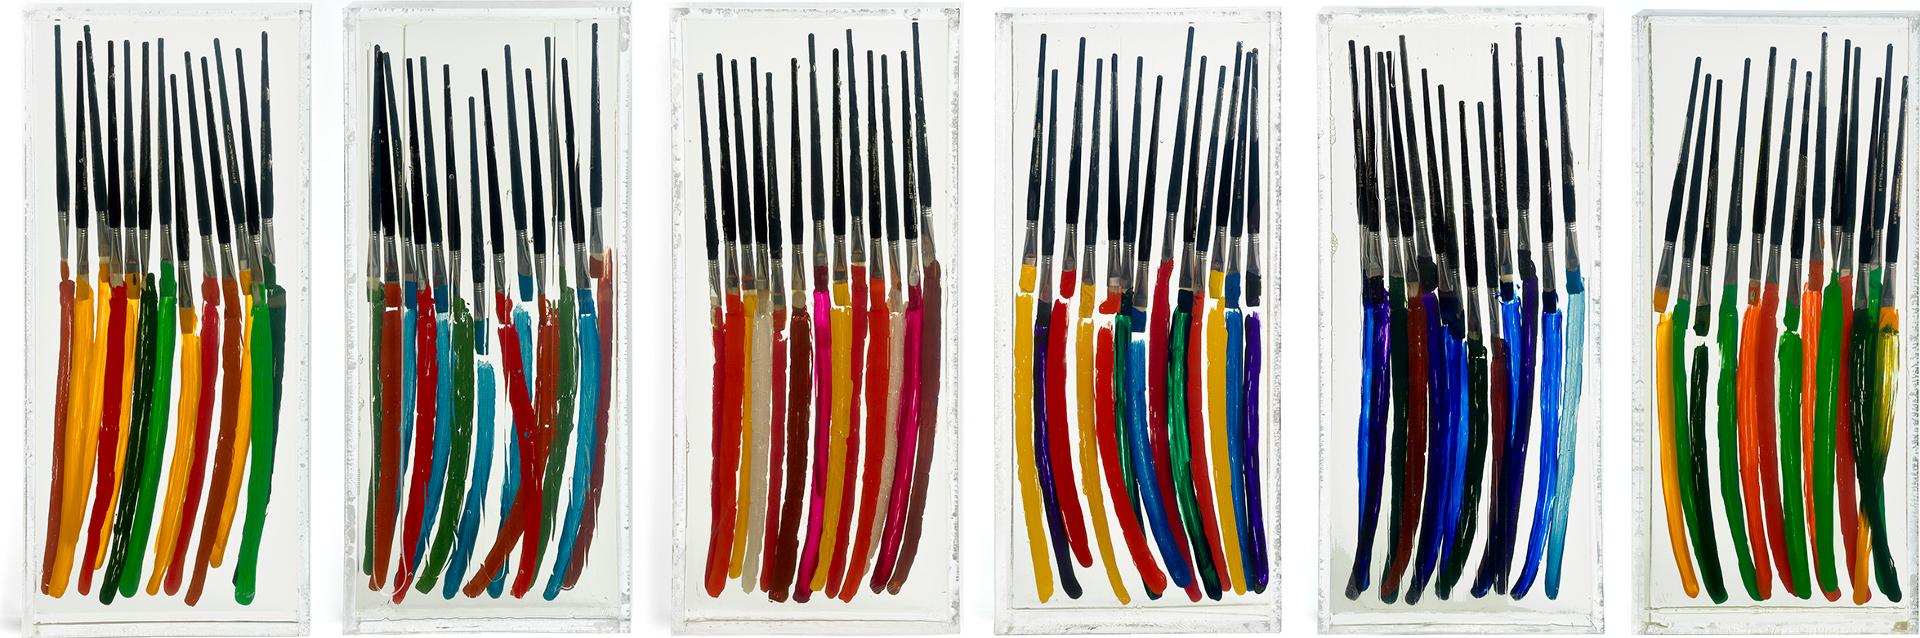 Arman (1929-2005) - Color Strokes (Paintbrushes), 1991 (complete set)